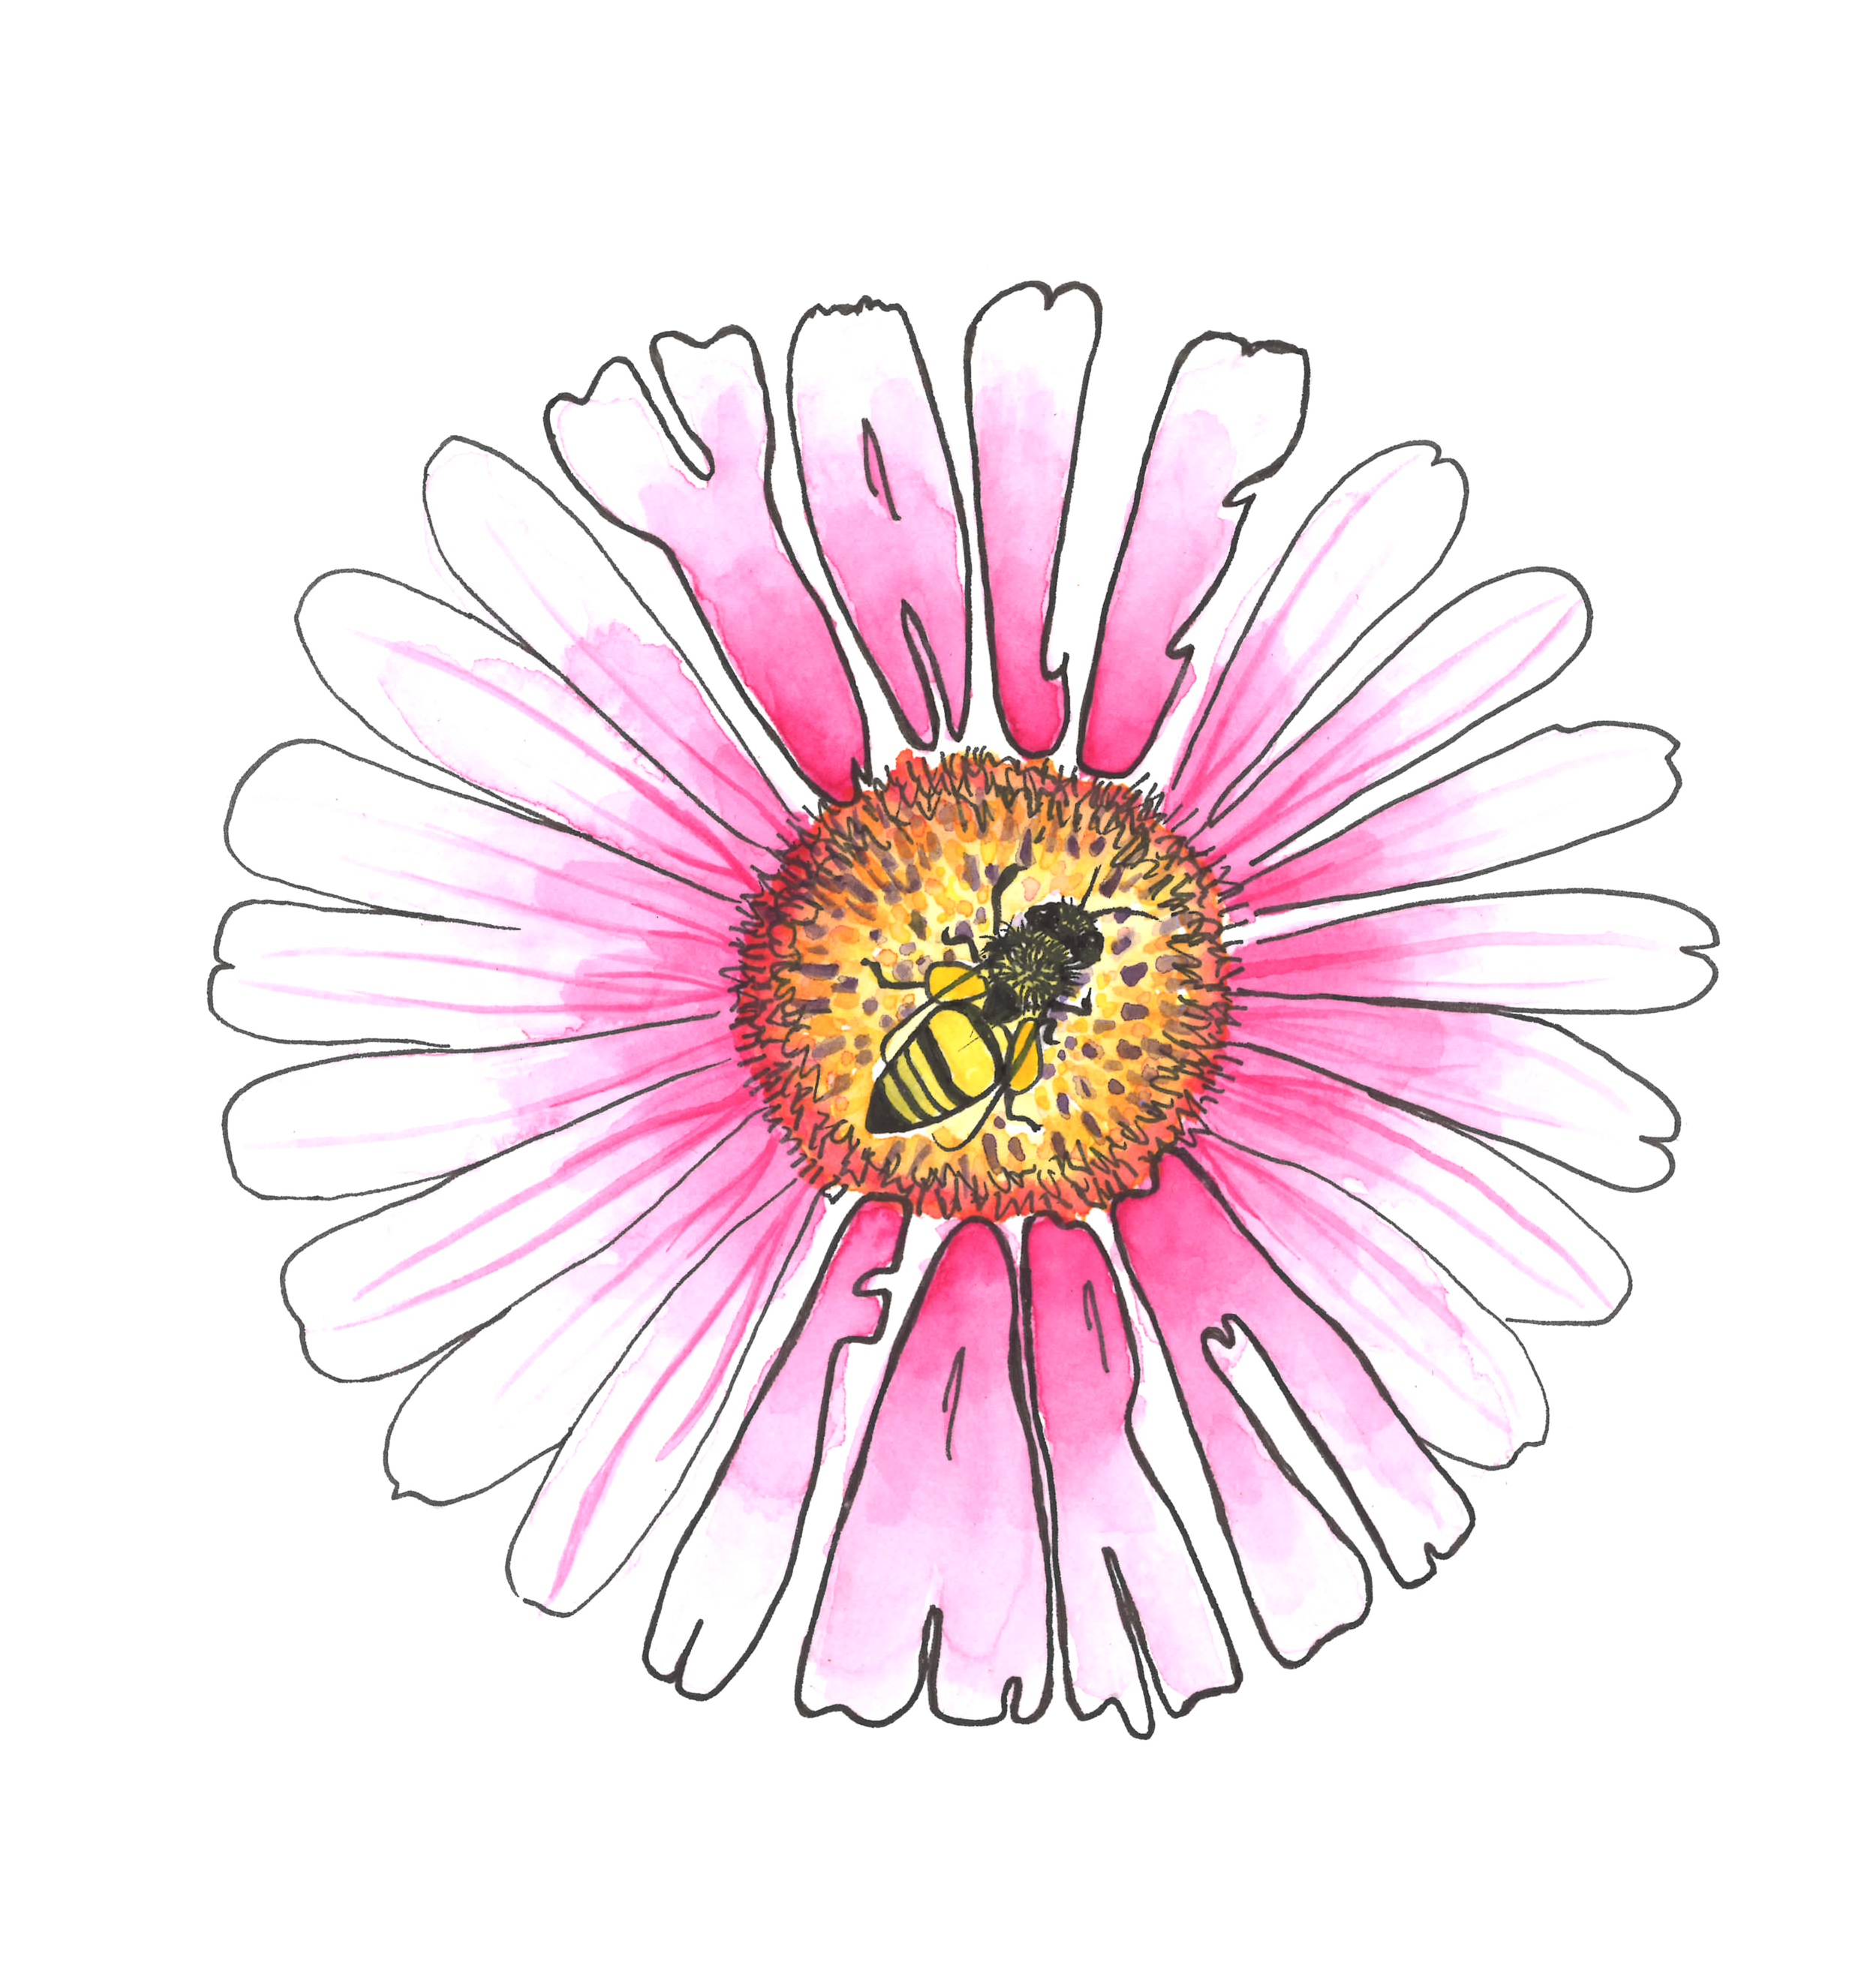  “Honeybee &amp; Flower” by Drew Vallero, Stanford '22 